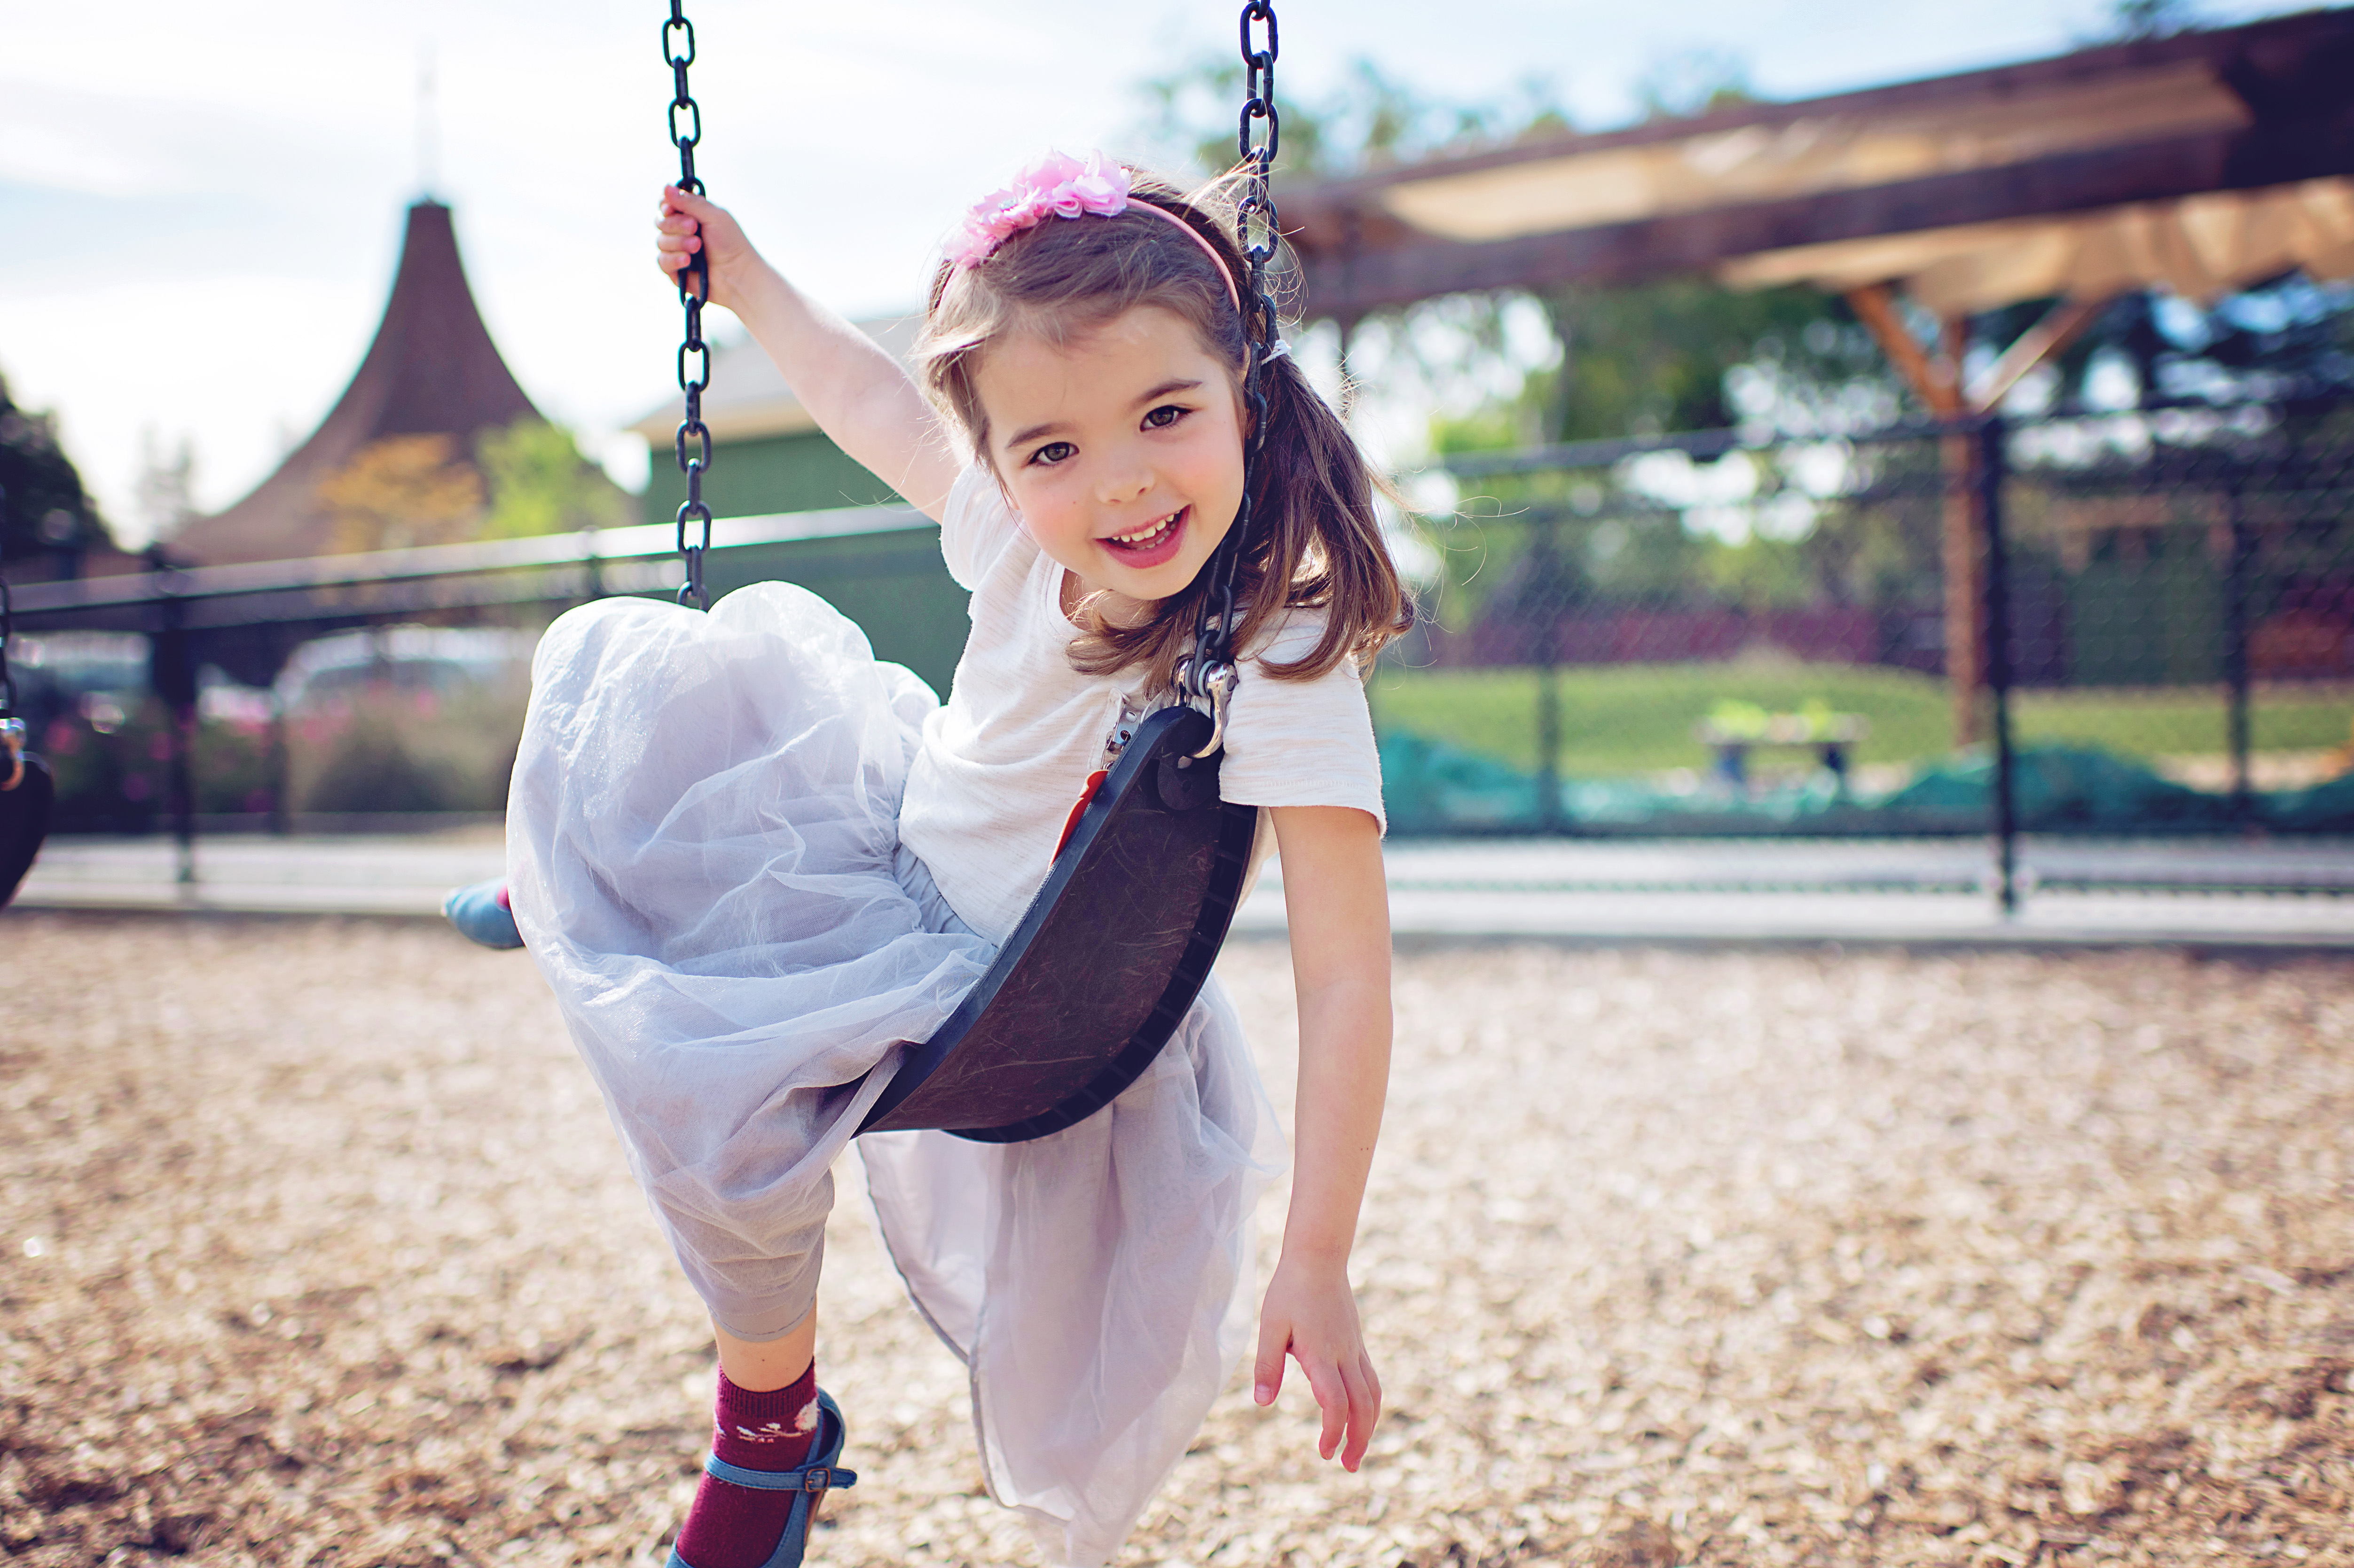 child on swing